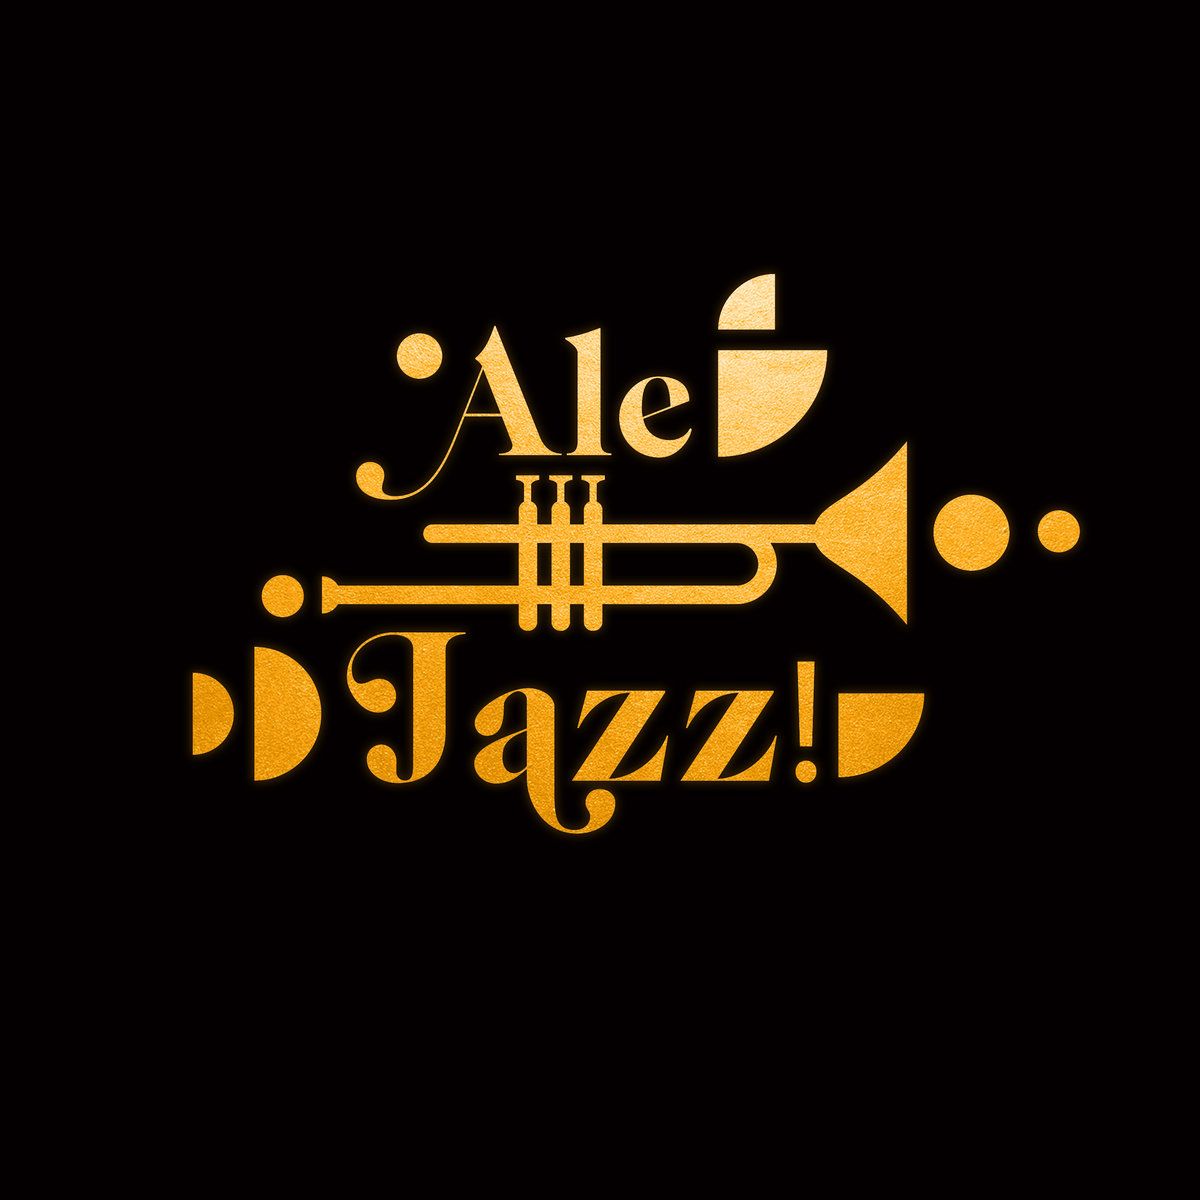 V/A - Ale Jazz! 422946 (5906409904251)